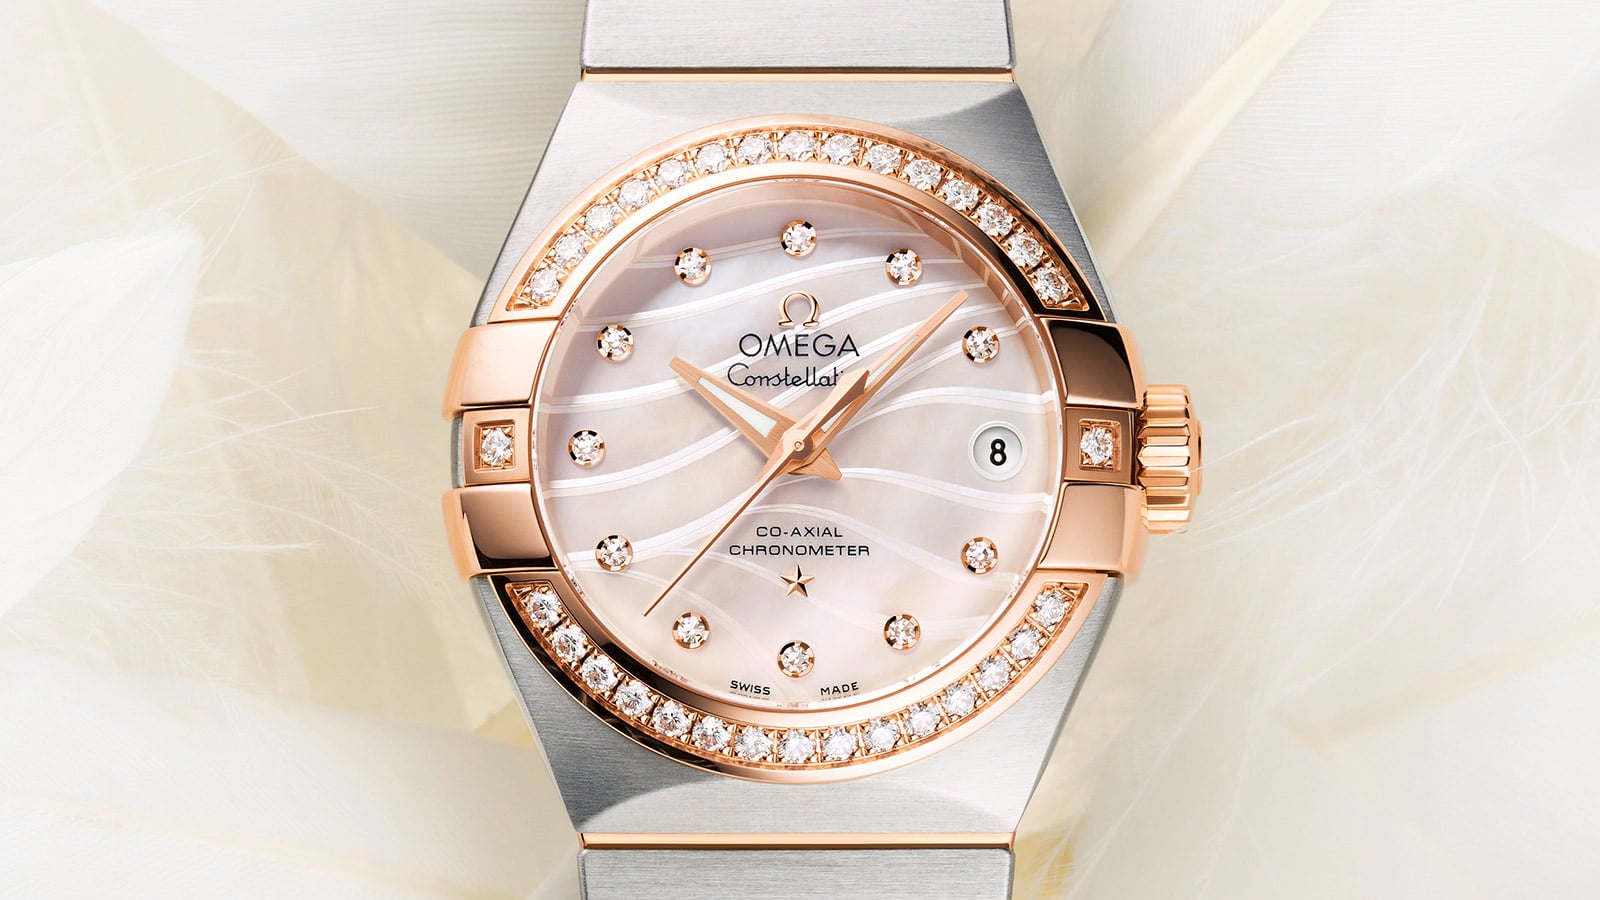 Omega Square Pocket Watch